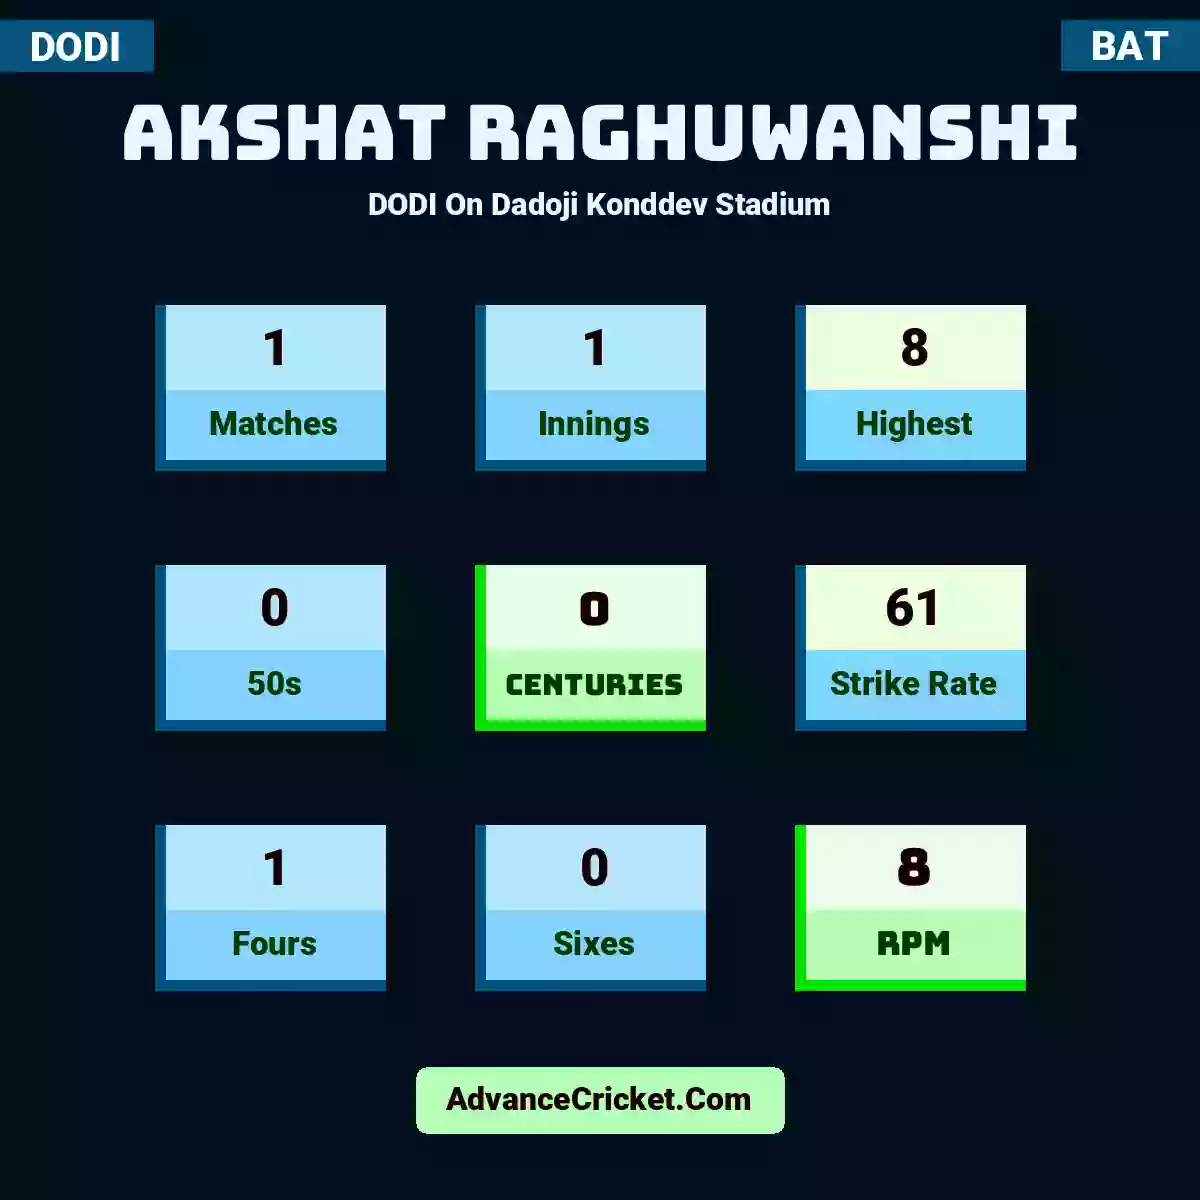 Akshat Raghuwanshi DODI  On Dadoji Konddev Stadium, Akshat Raghuwanshi played 1 matches, scored 8 runs as highest, 0 half-centuries, and 0 centuries, with a strike rate of 61. A.Raghuwanshi hit 1 fours and 0 sixes, with an RPM of 8.